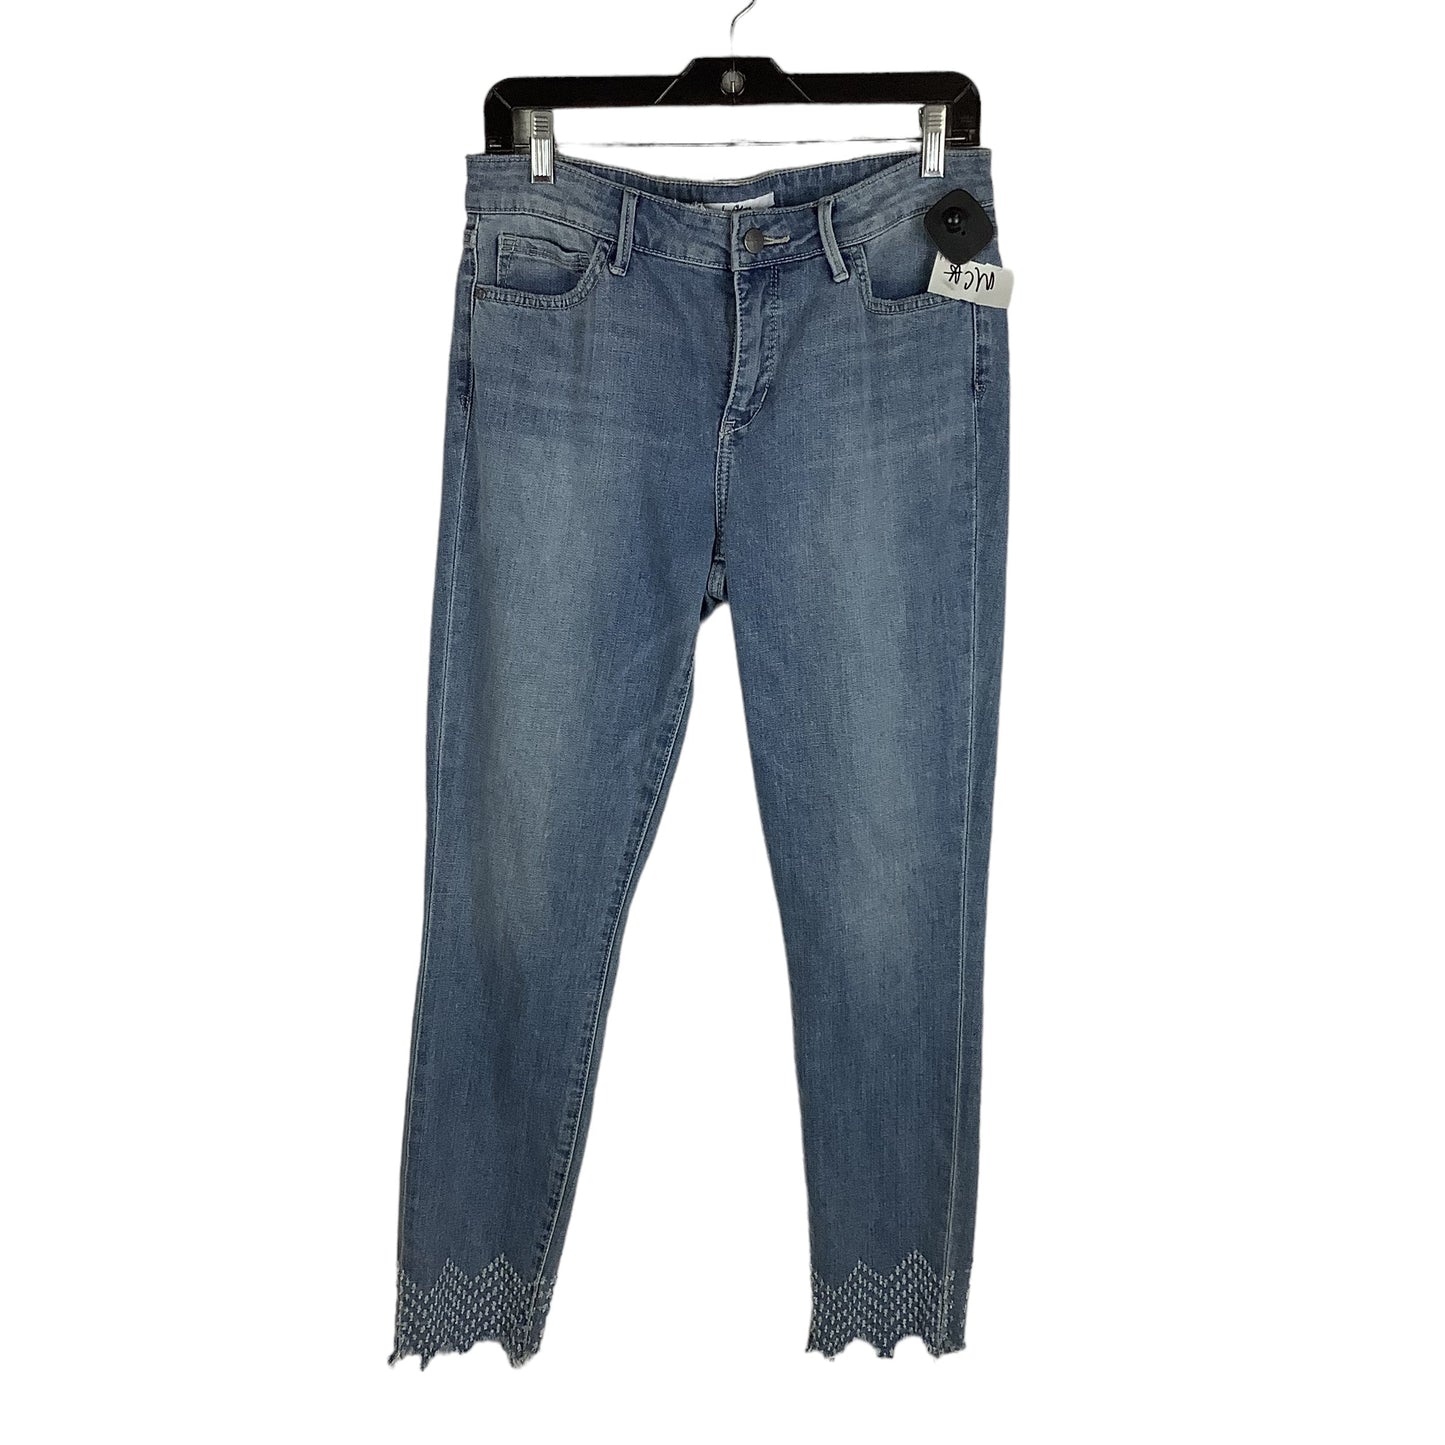 Blue Denim Jeans Skinny Sam Edelman, Size 8